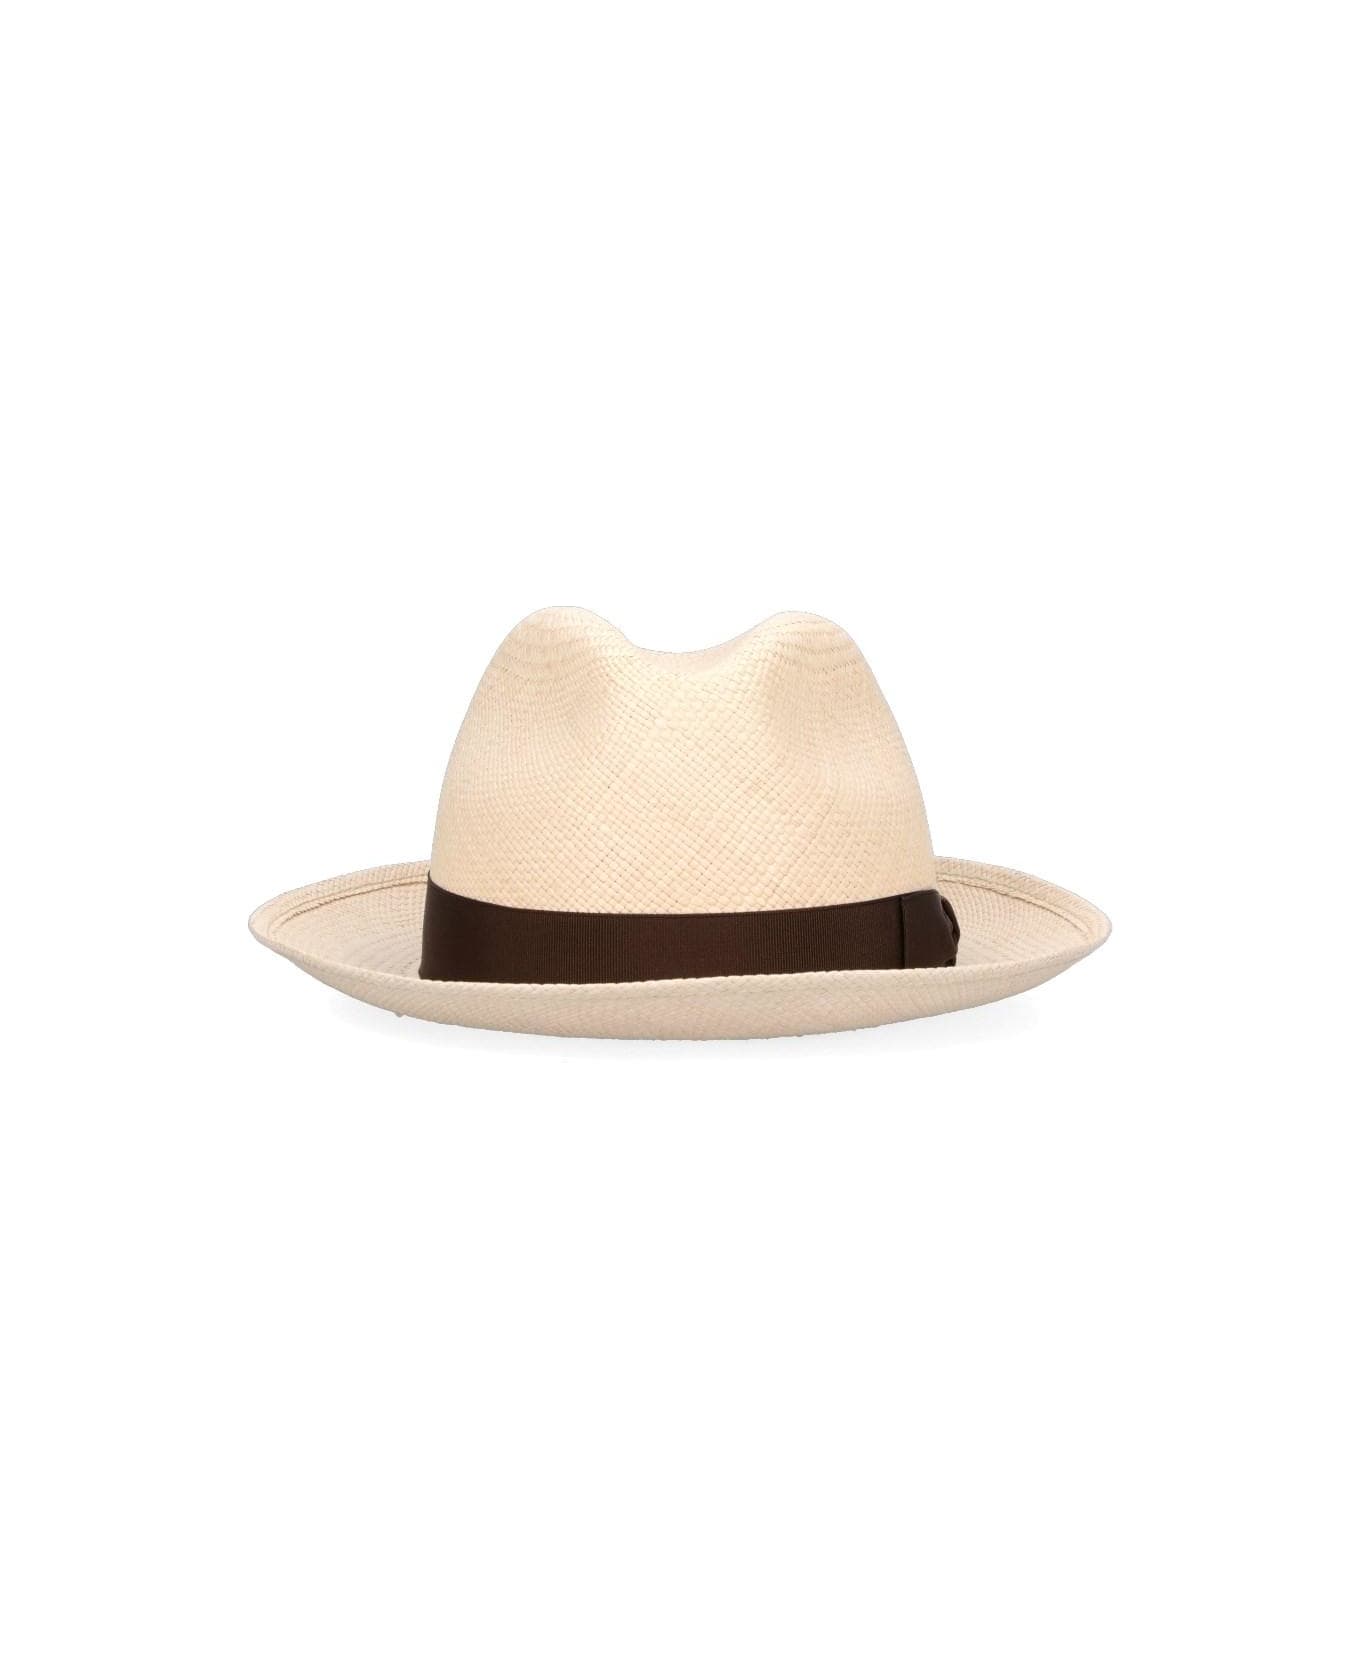 Borsalino 'panama' Hat - Naturale 帽子